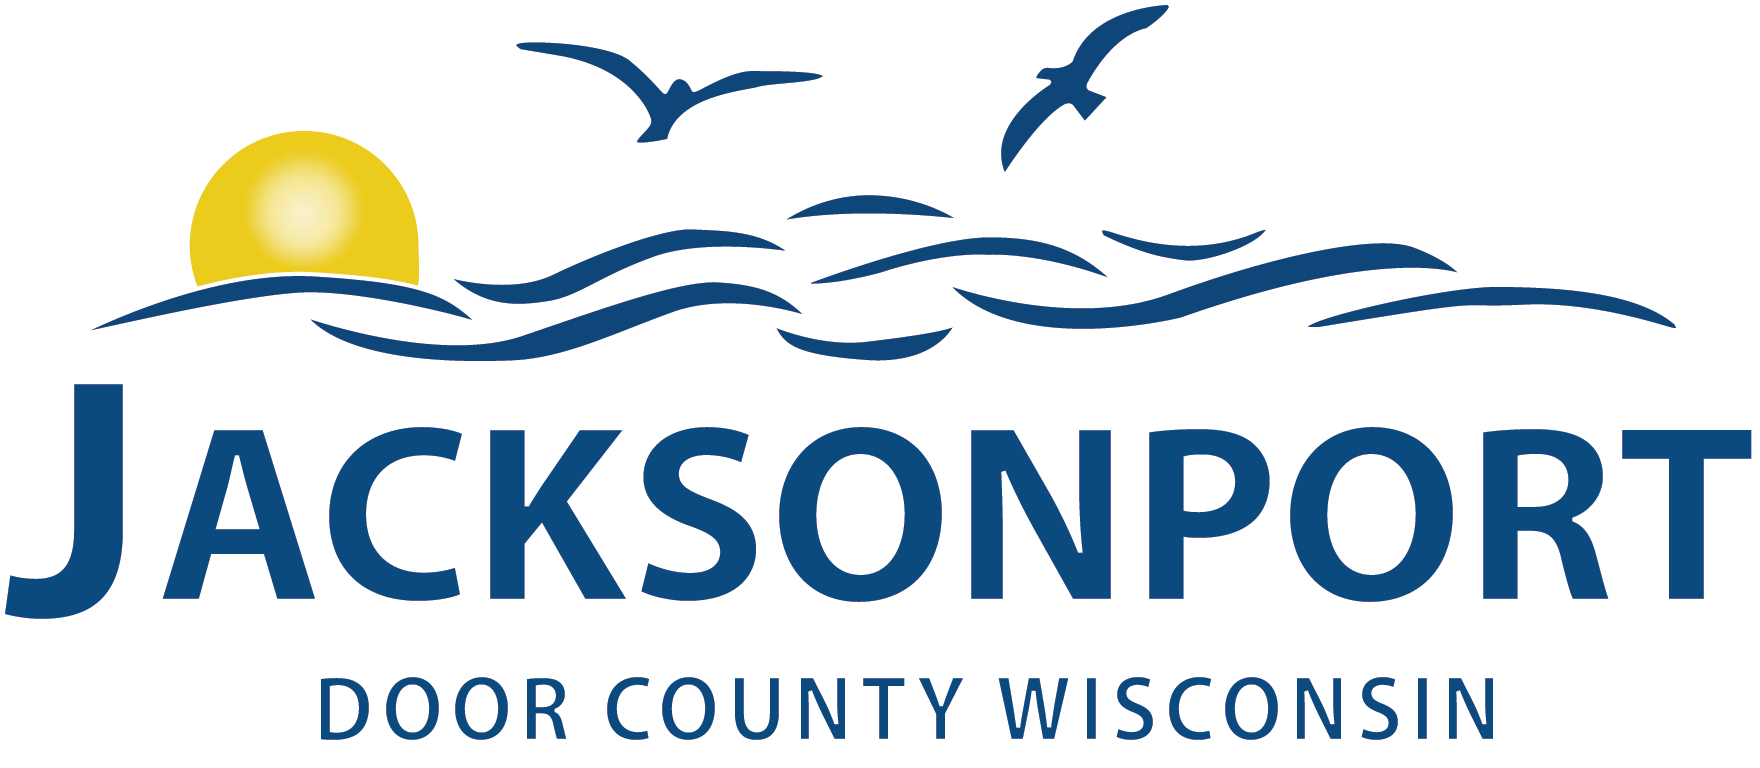 Jacksonport Logo.png